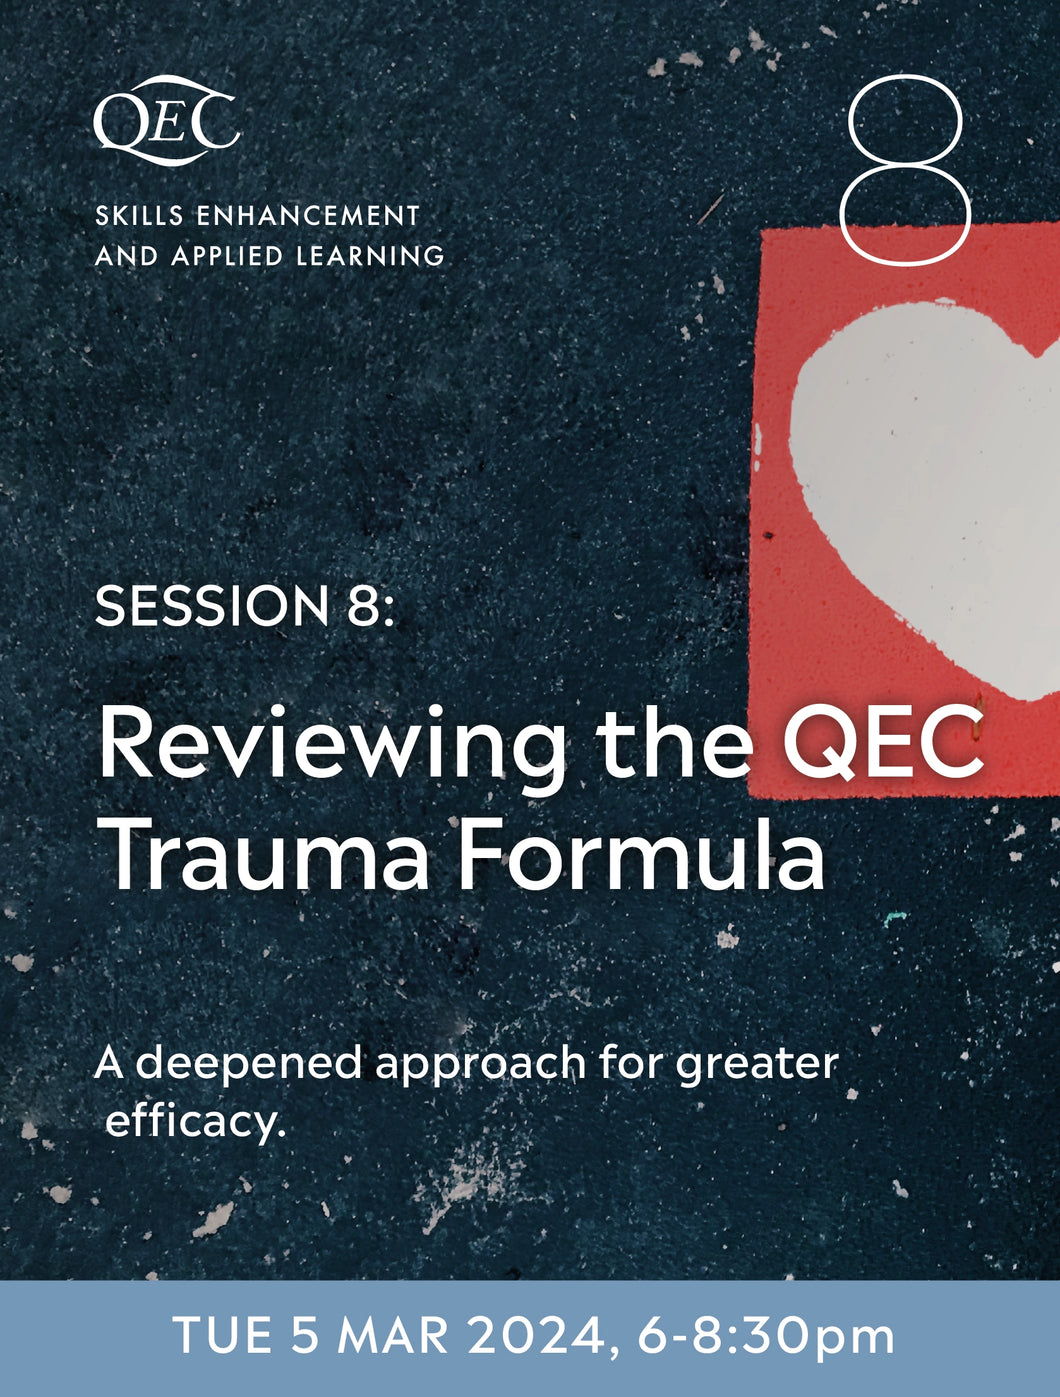 SEAL Session 8: Reviewing the QEC Trauma Formula - 5 Mar 24 (6-8.30pm, UK time)